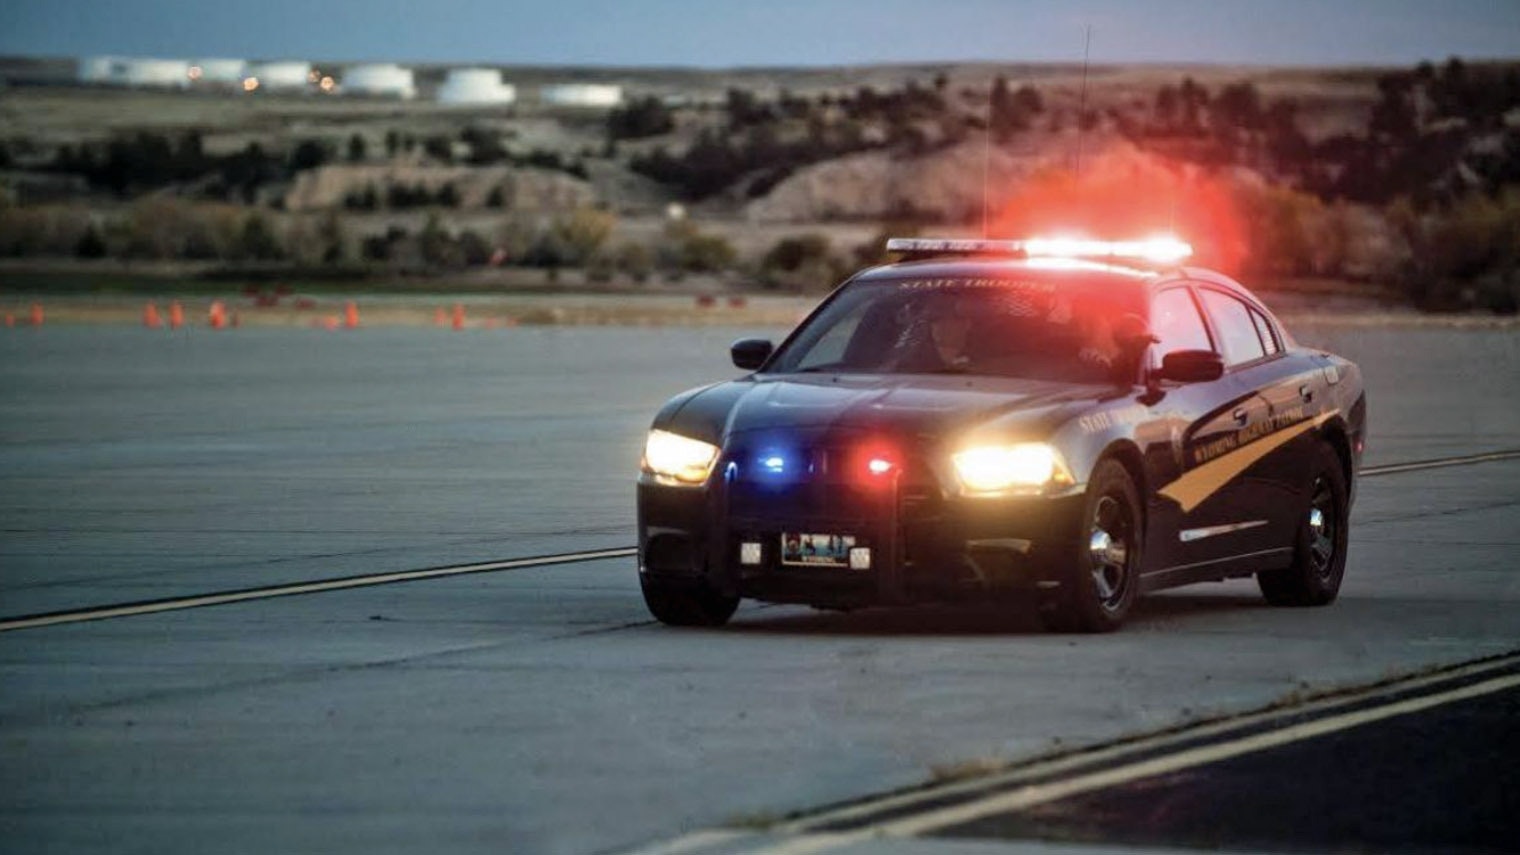 Wyoming highway patrol photo